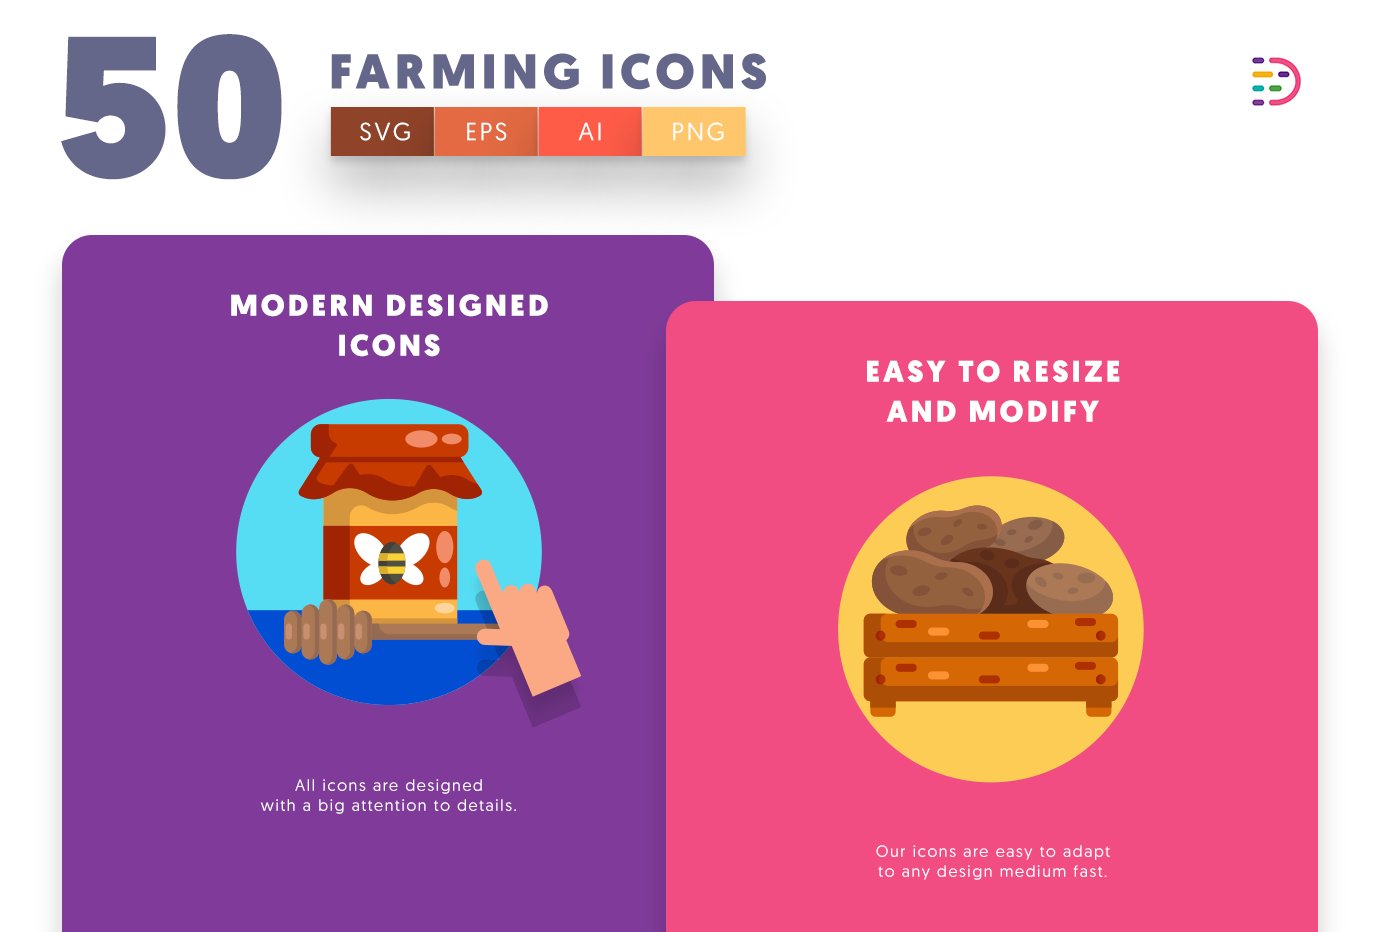 farming icons cover copy 5 425